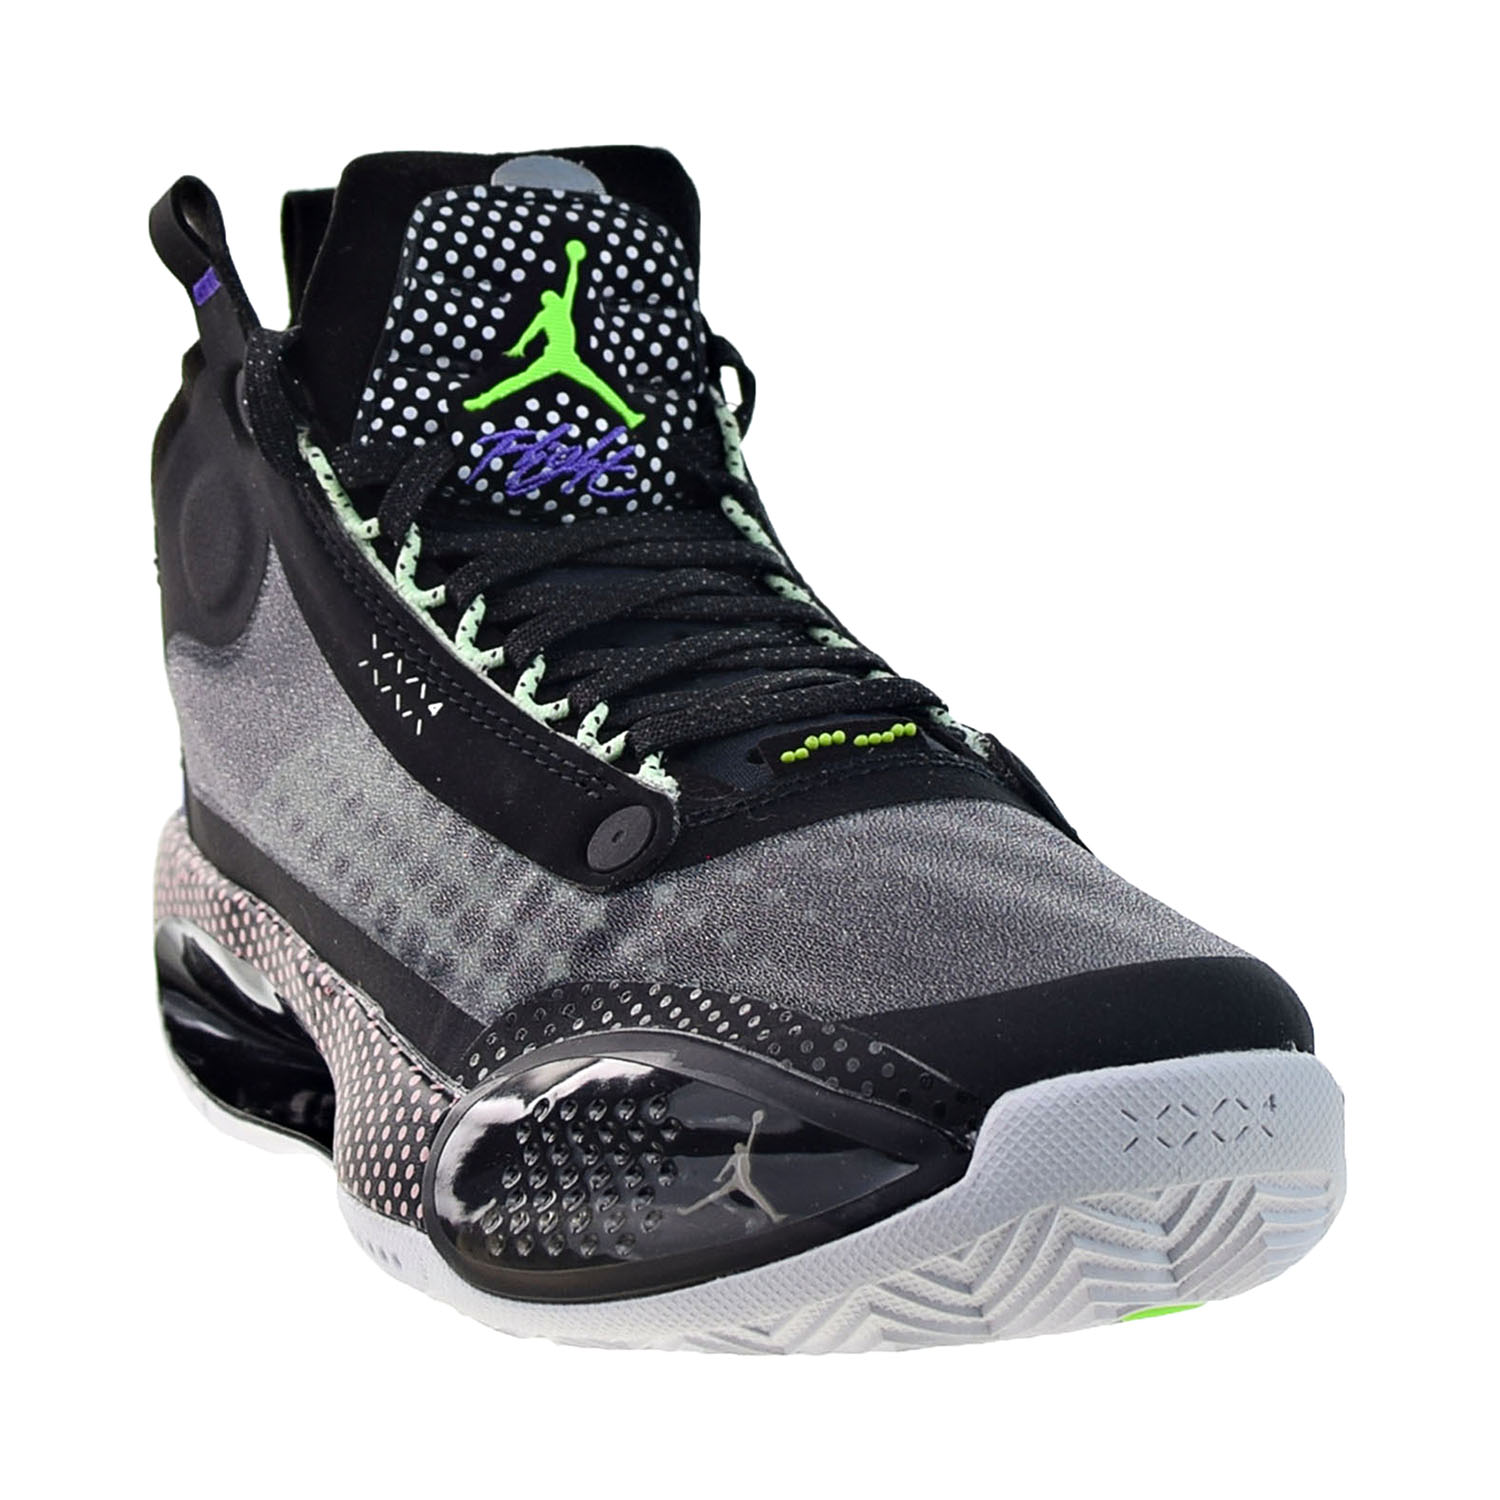 Air Jordan XXXIV 34 Big Kids' Basketball Shoes Black-White-V Green bq3384-013 - image 2 of 6